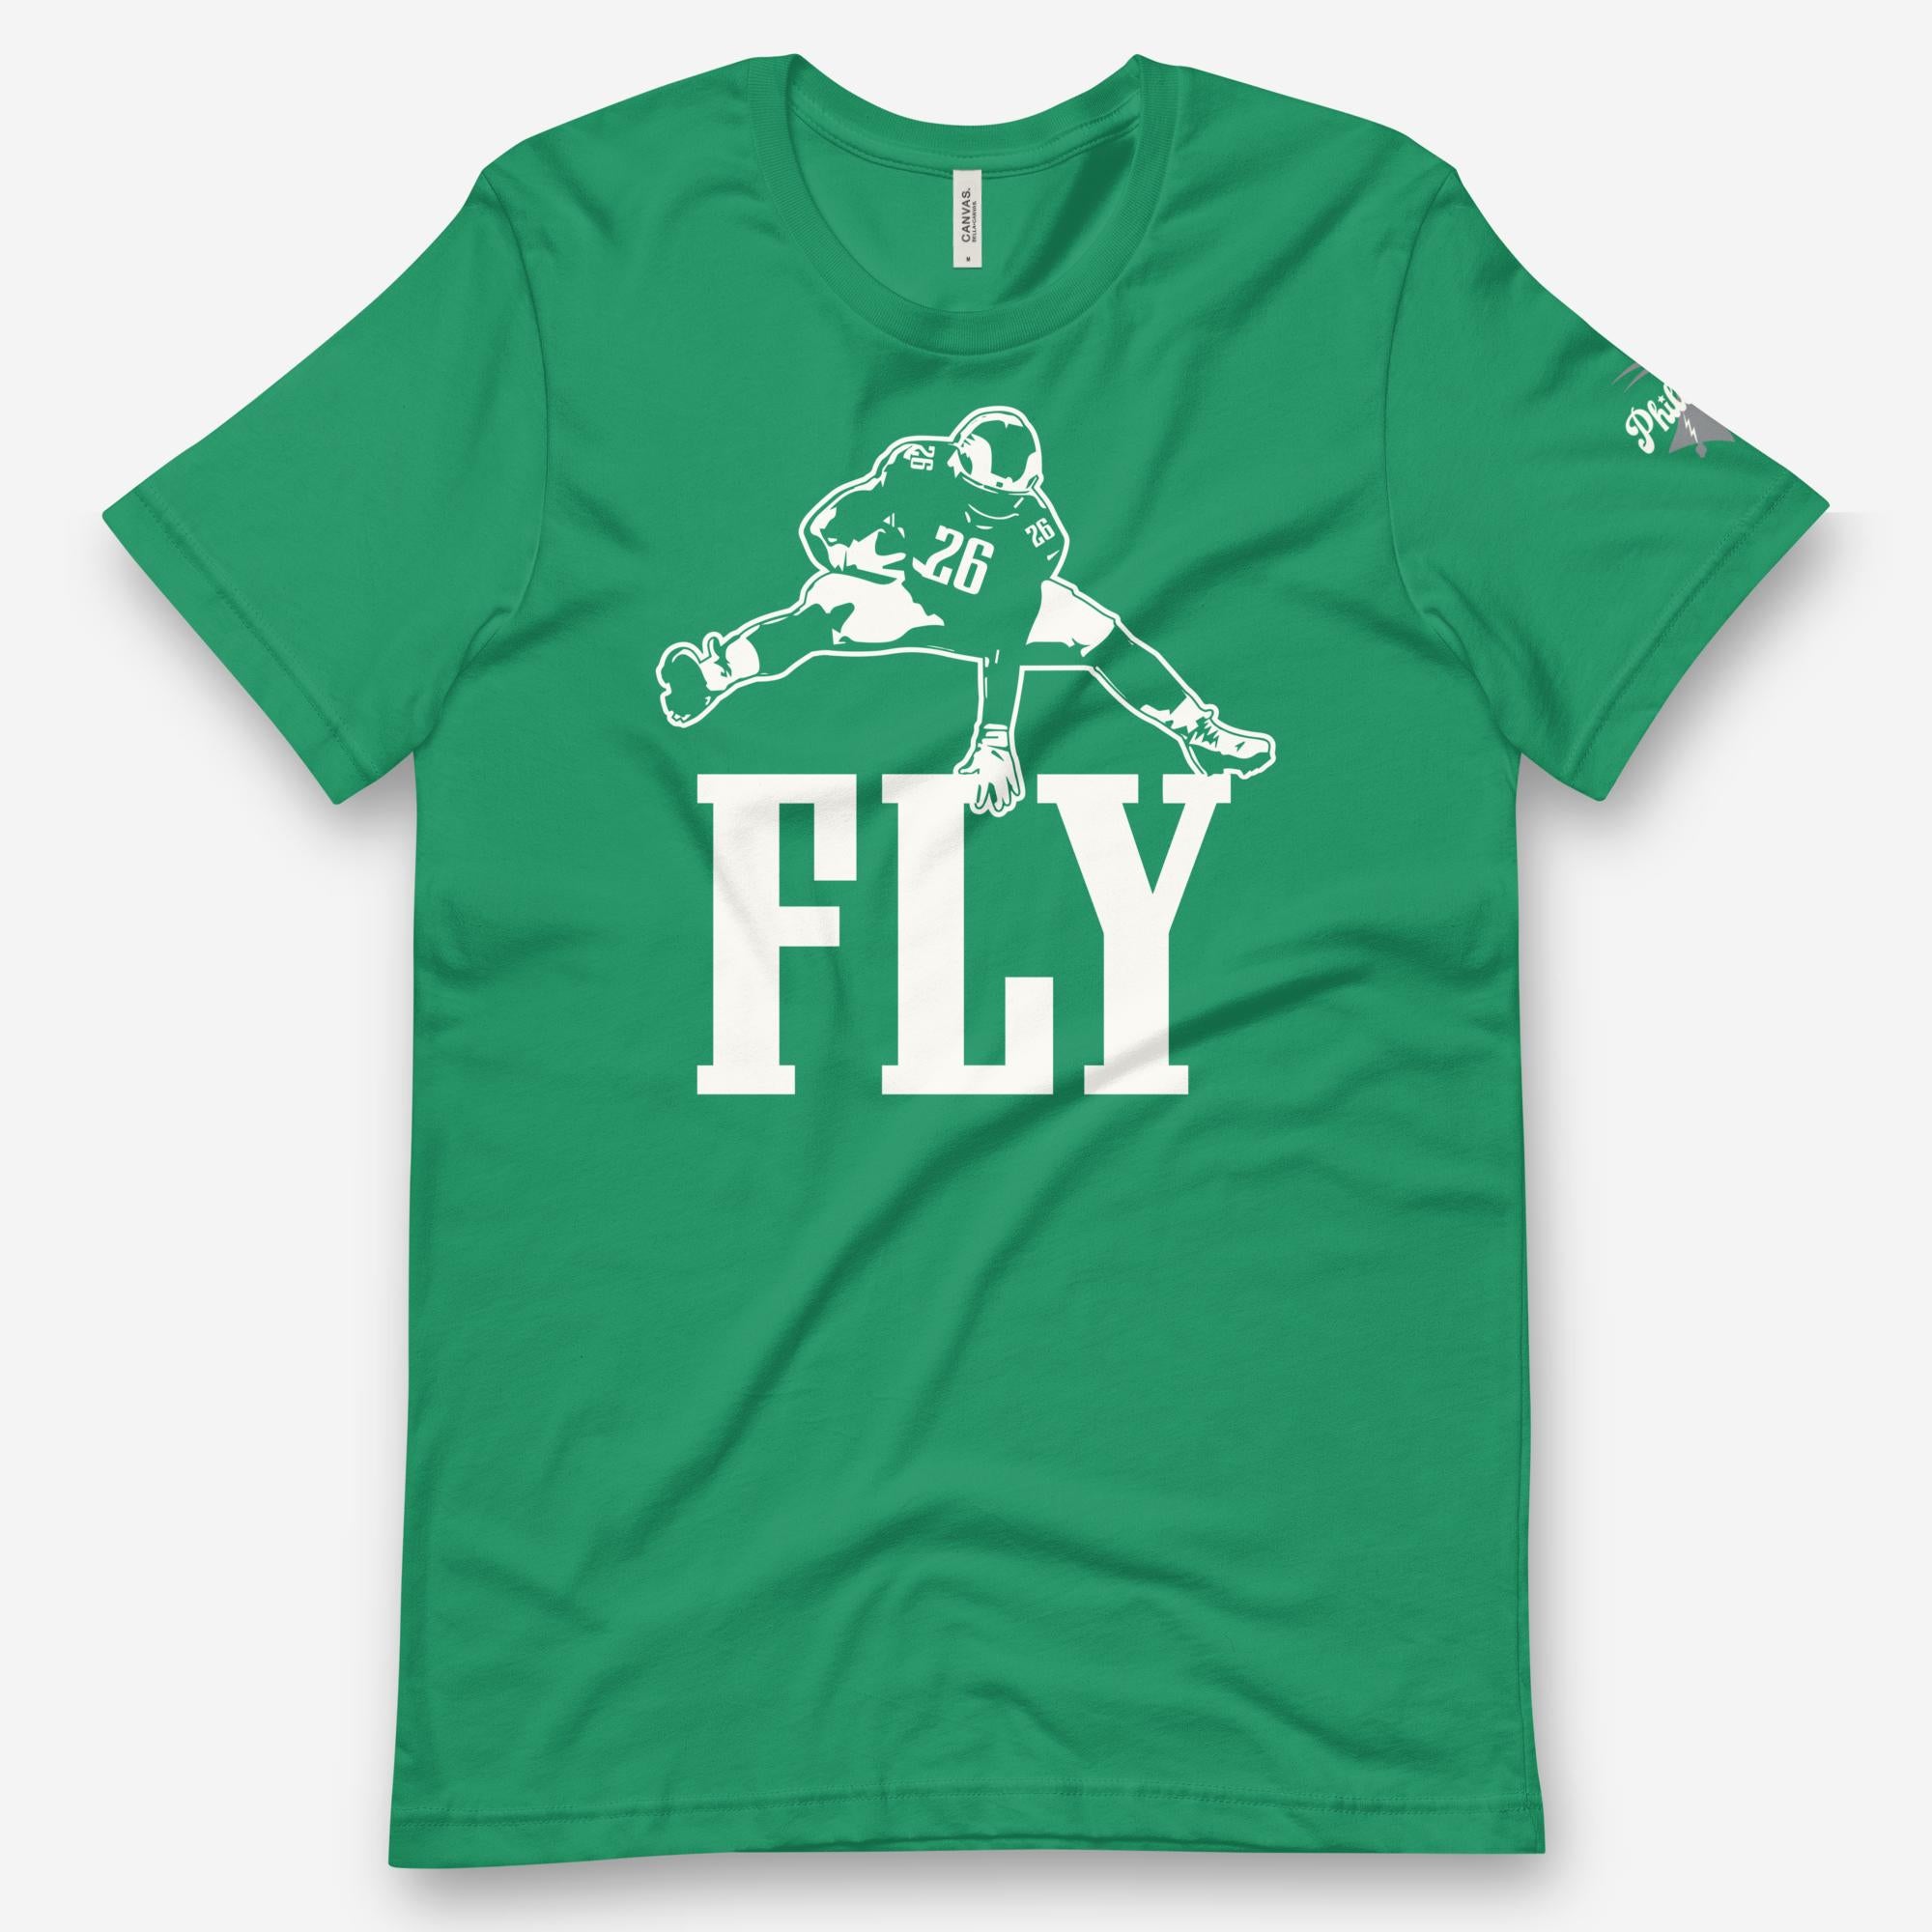 "Flyquon" Tee